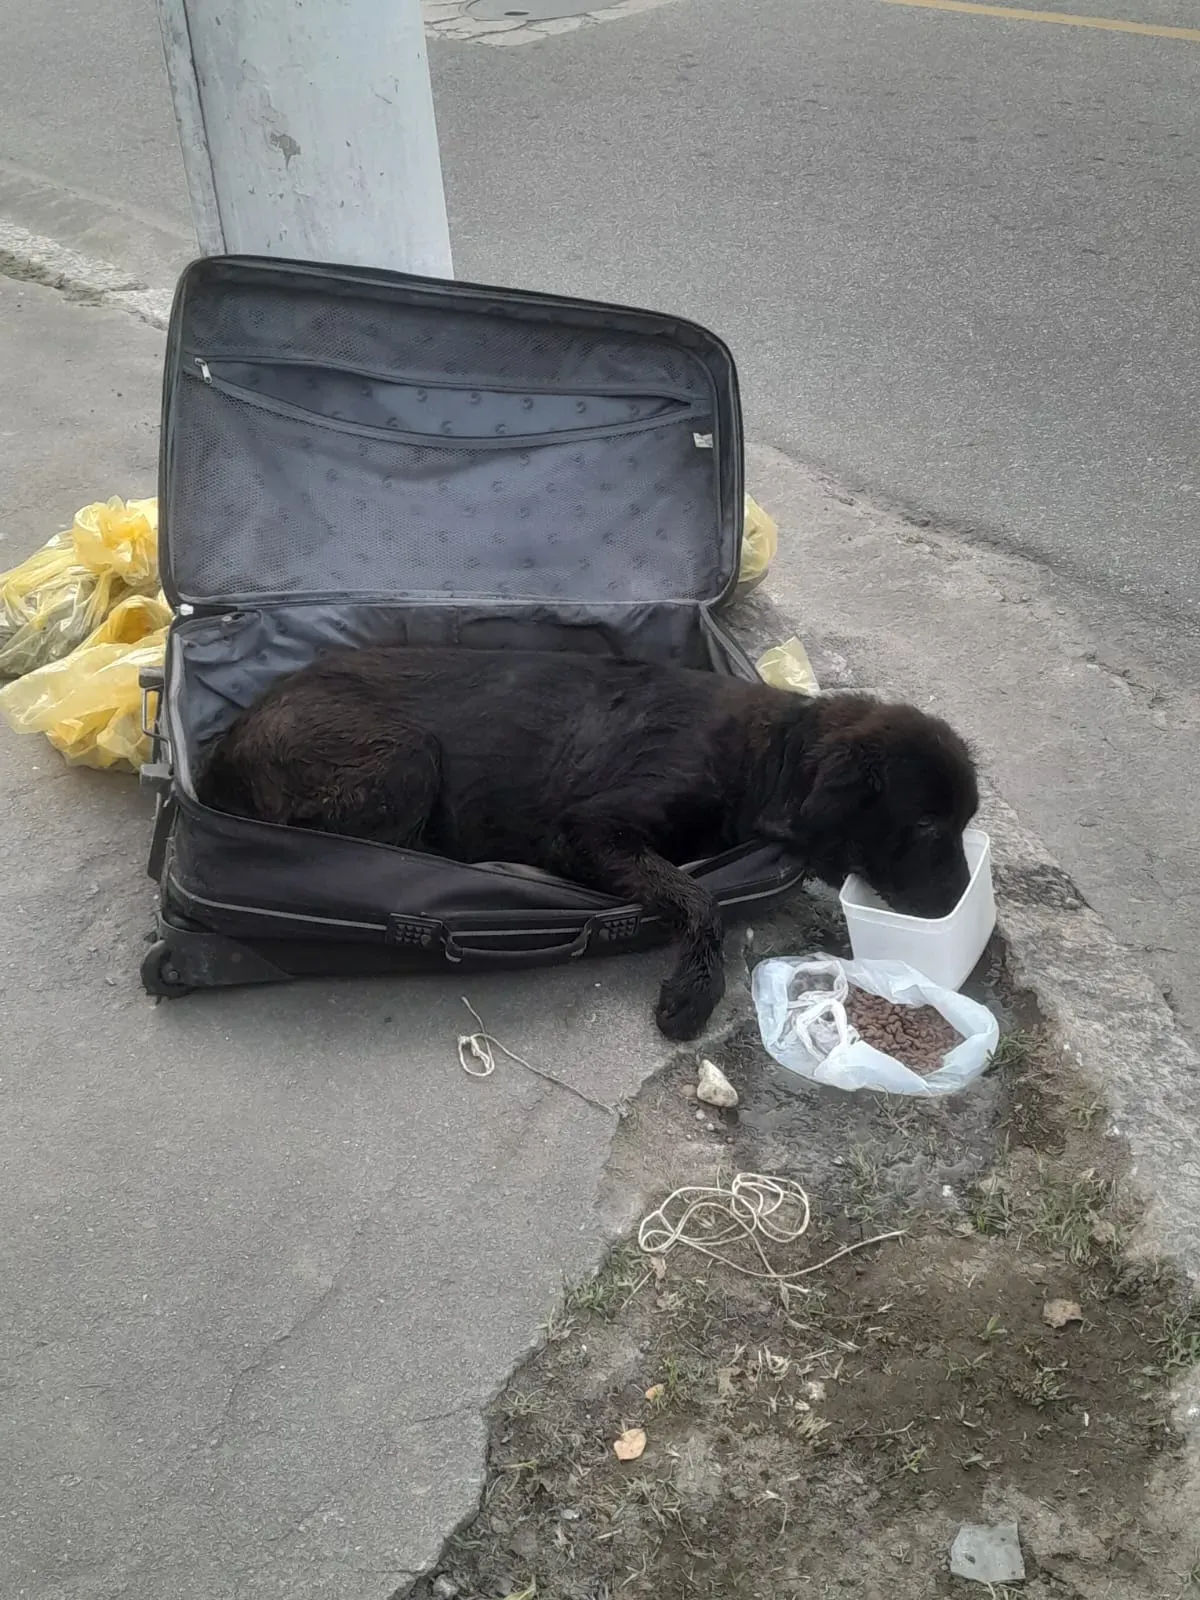 Cachorrinha foi abandonada em uma mala na rua